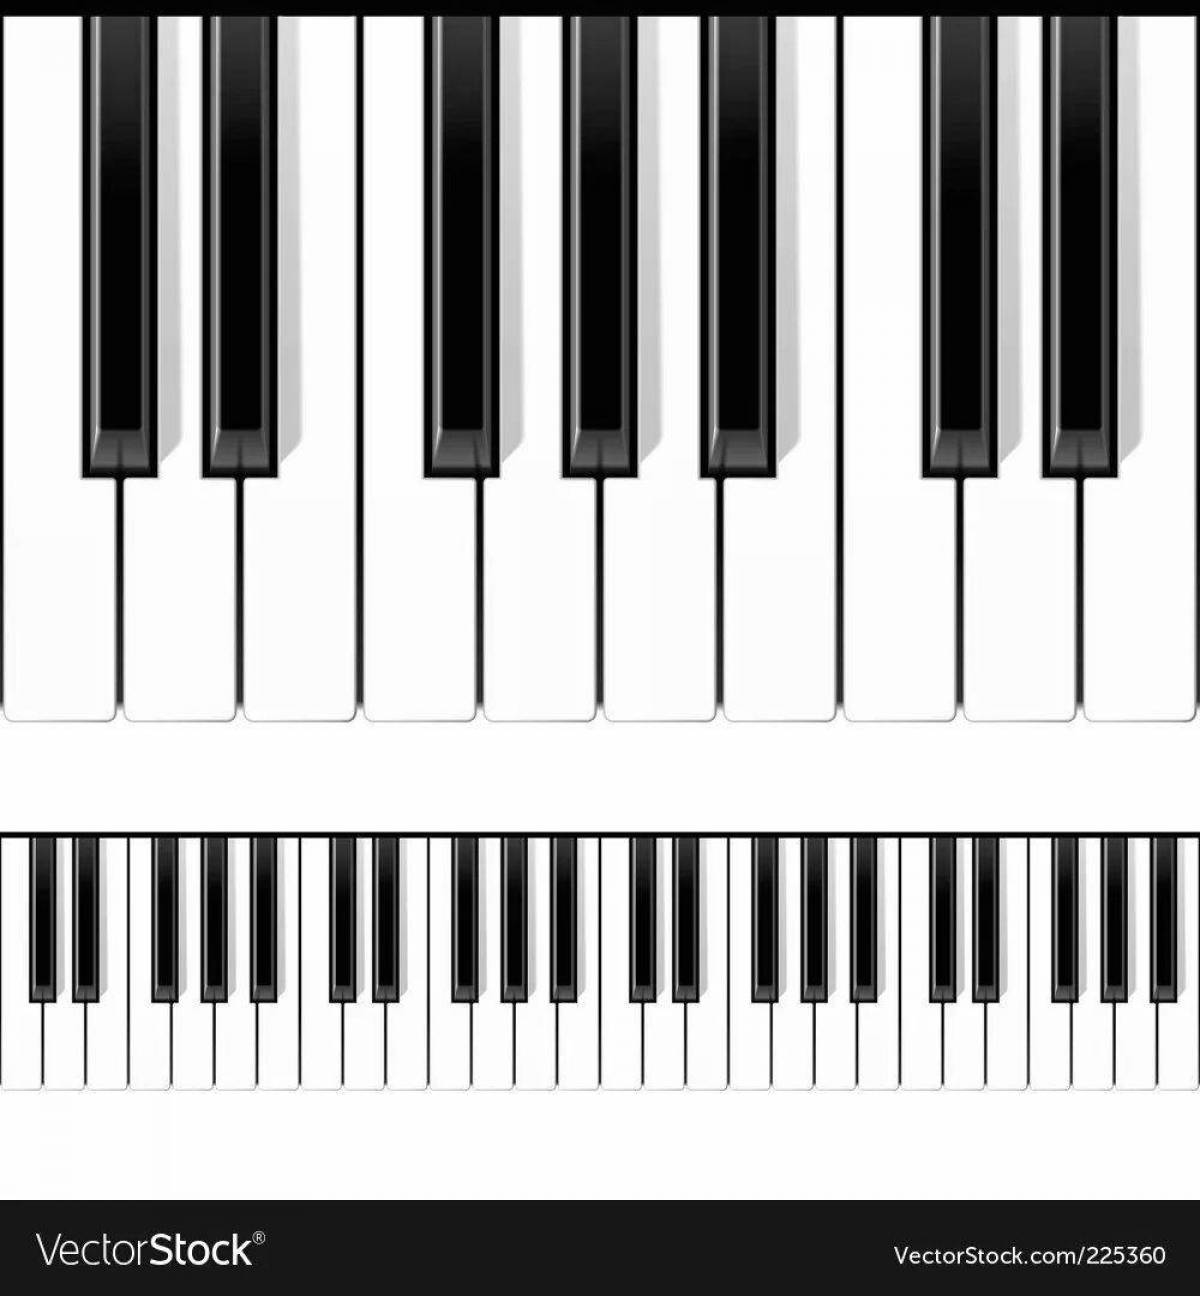 Coloring live piano keys